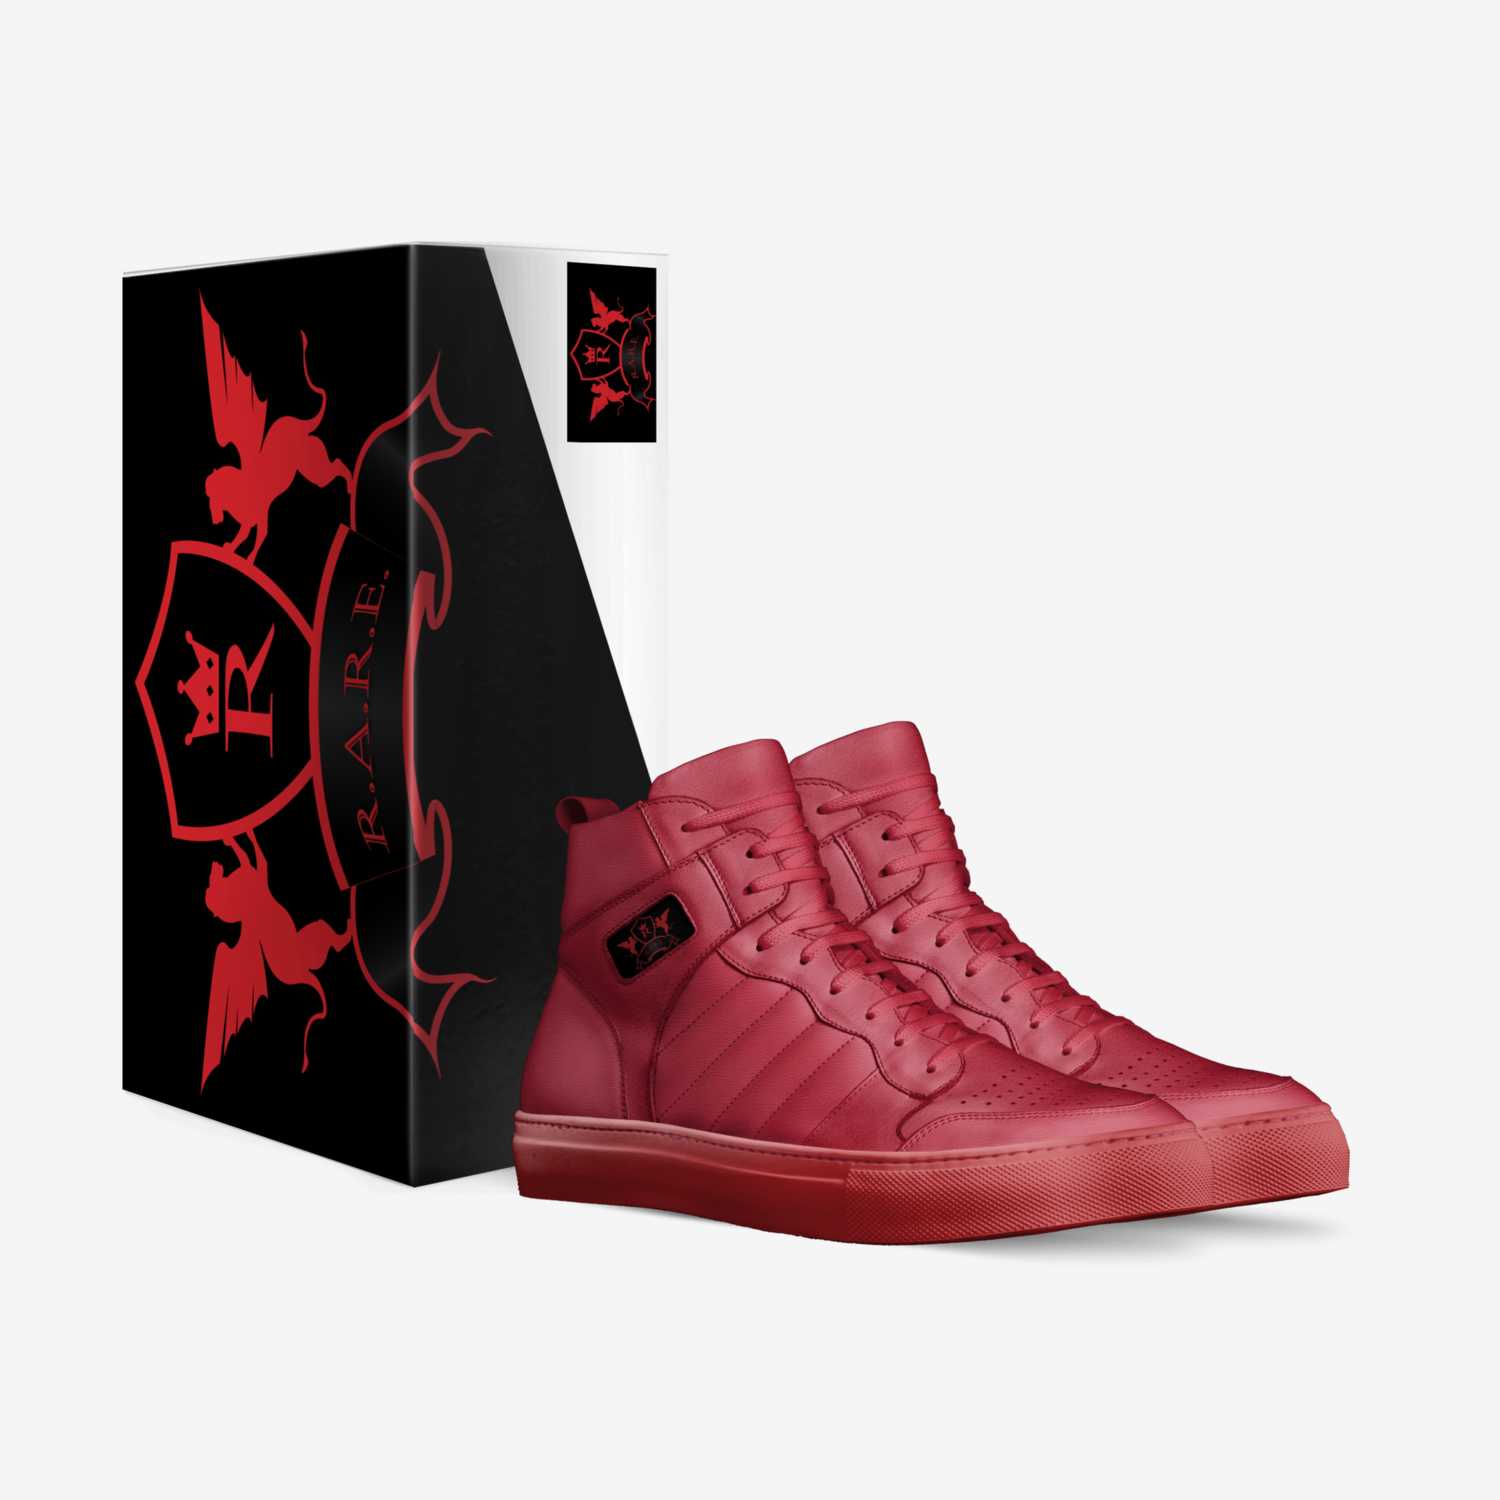 CRIMSON custom made in Italy shoes by John A. Annan | Box view